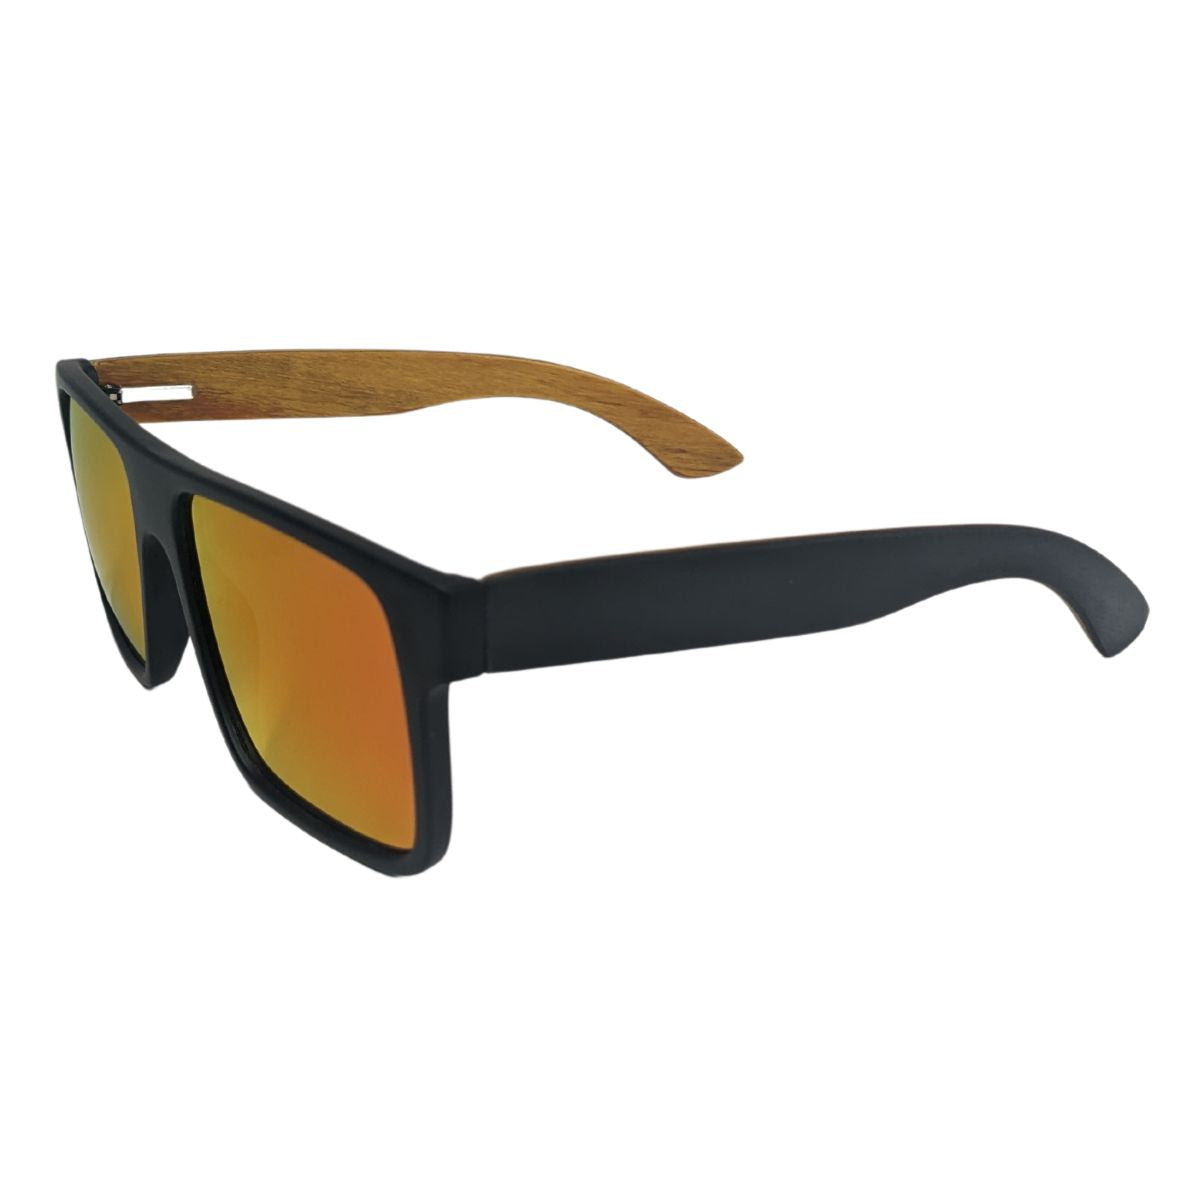 Slapper Shades Bamboo-zled Polarized Sunglasses